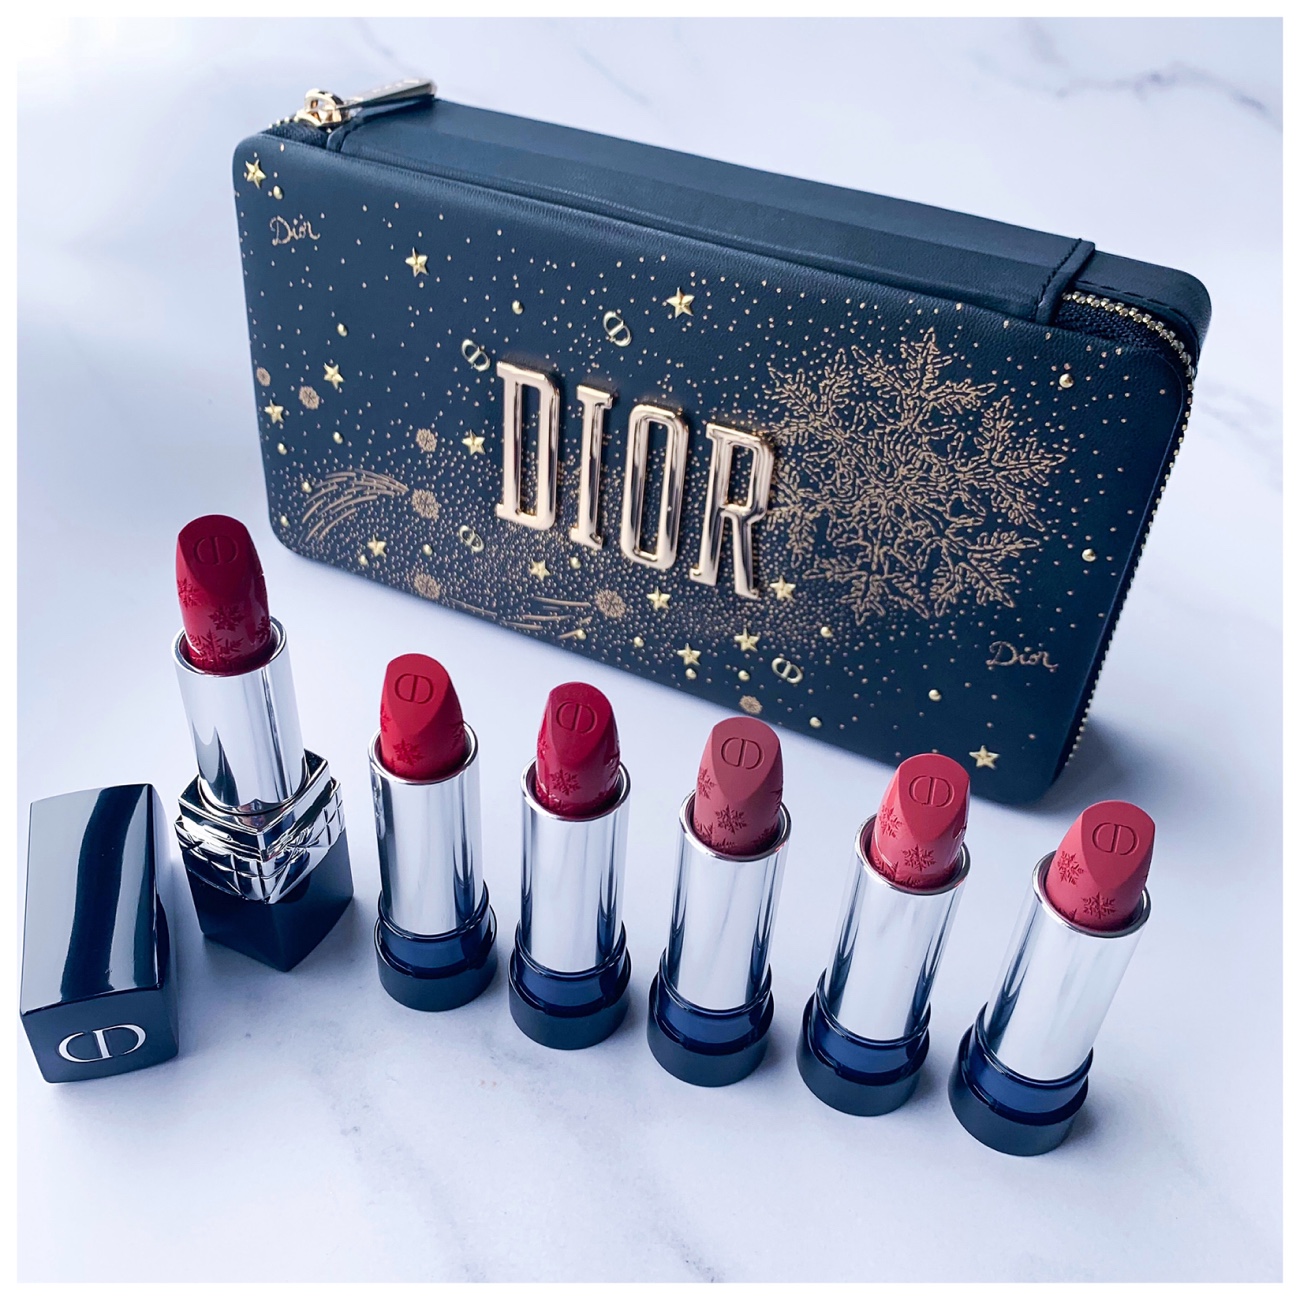 dior lipstick set with clutch